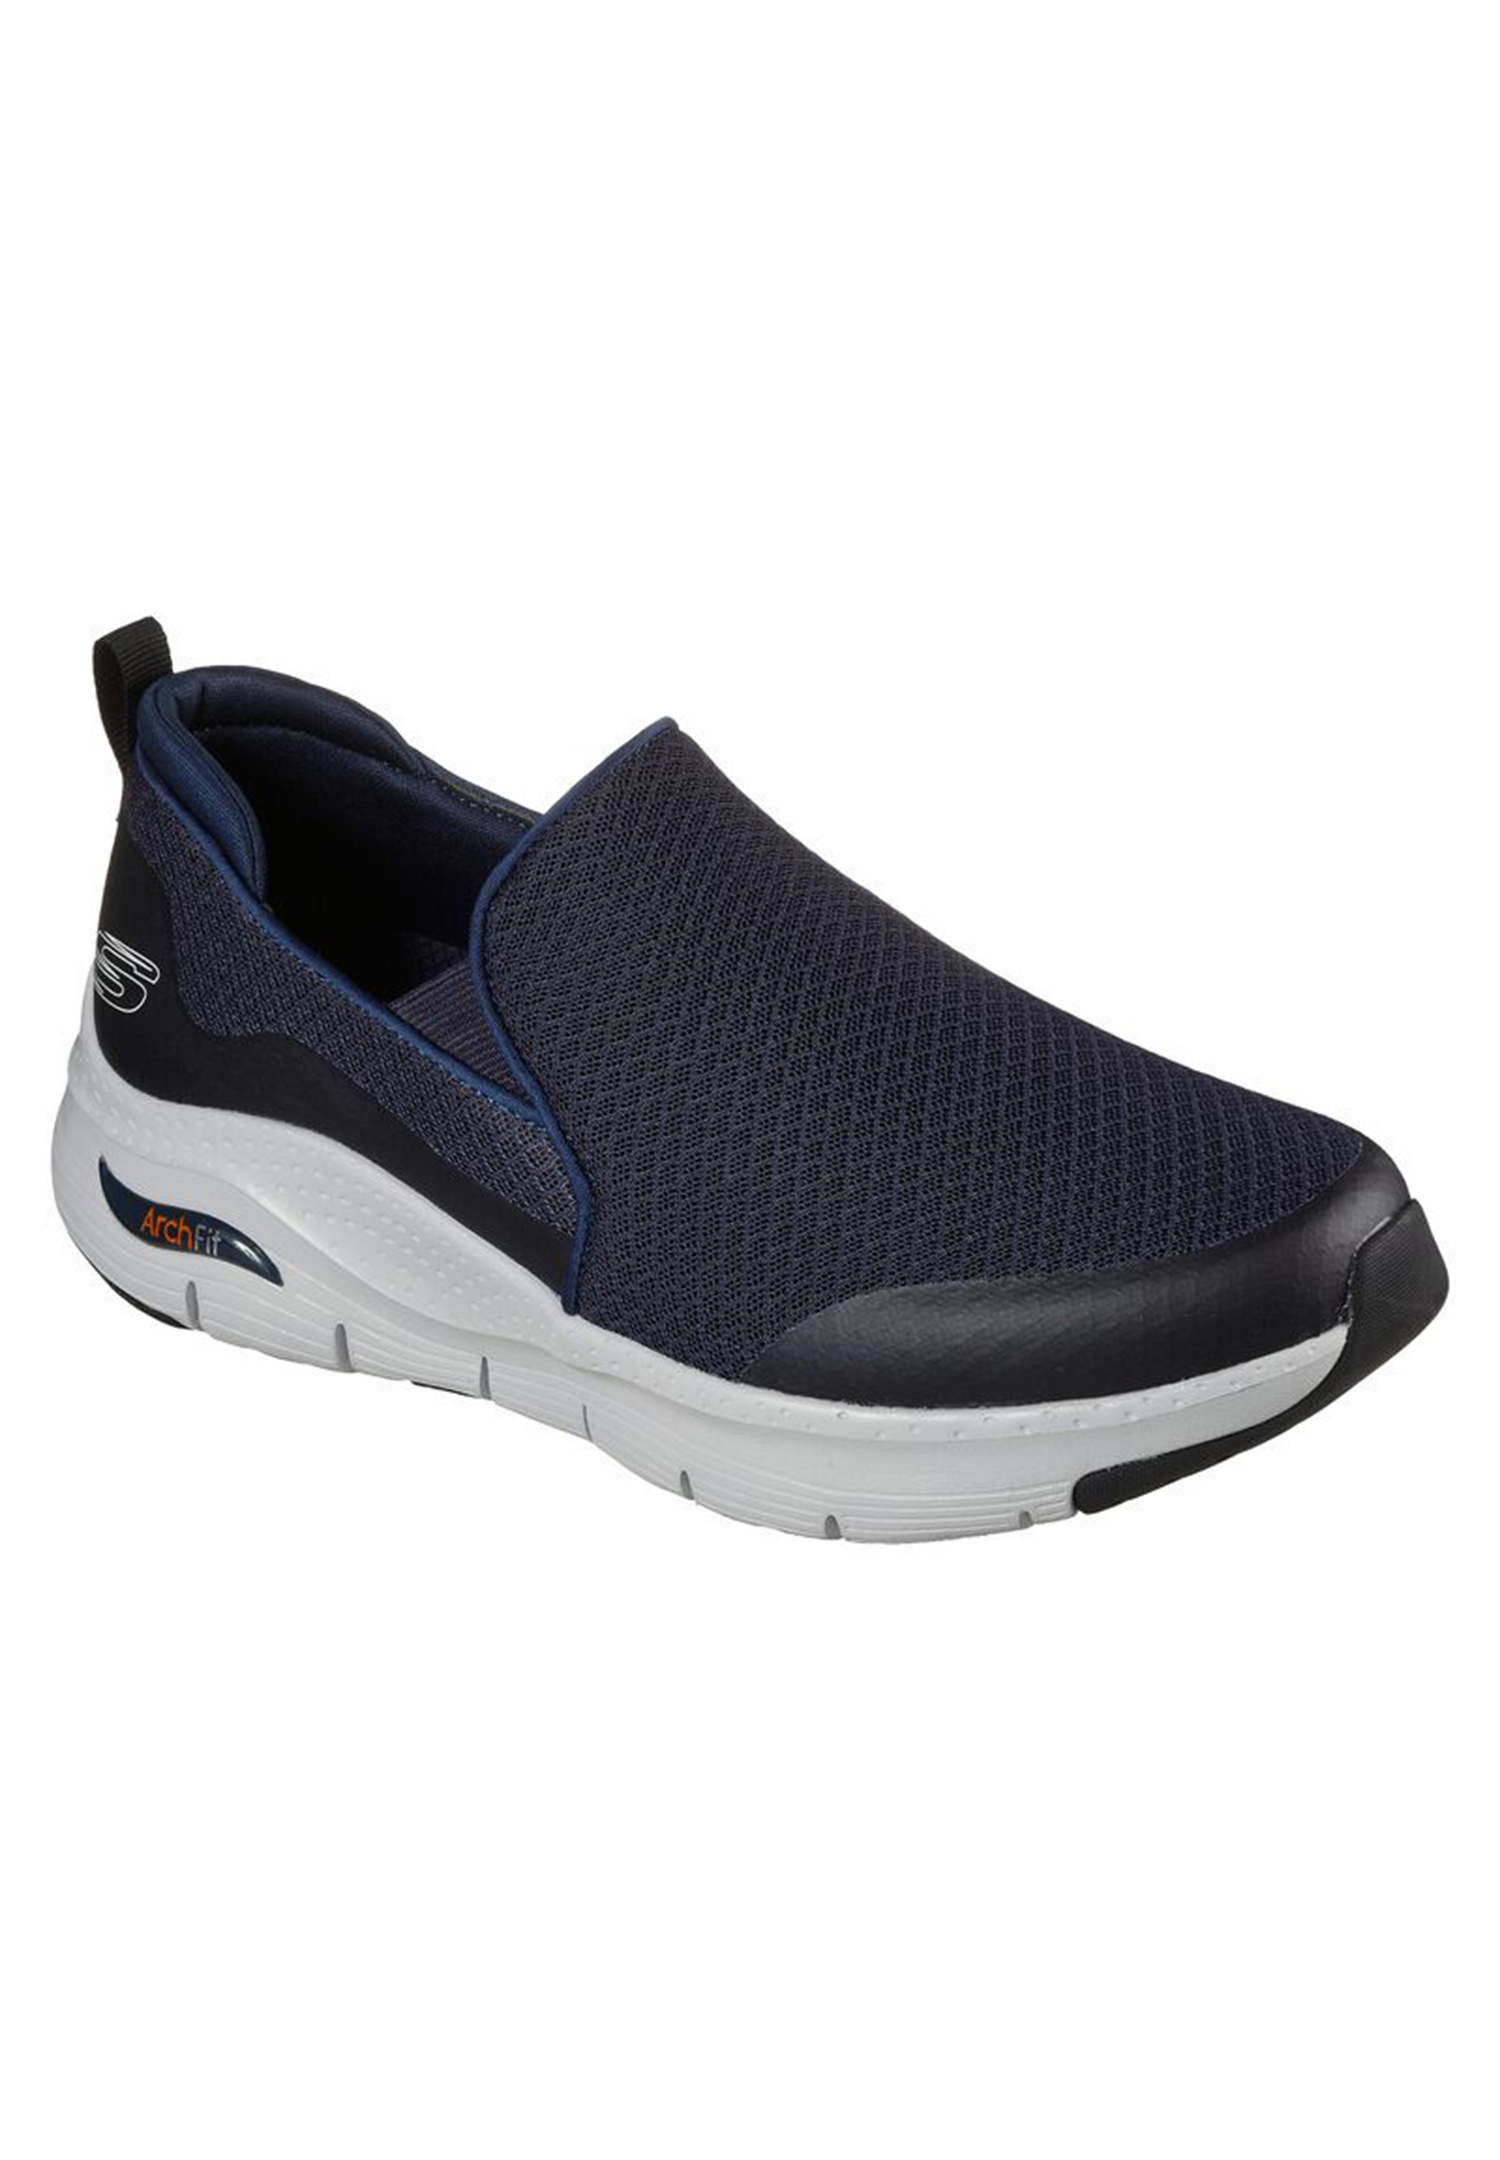 Skechers Herren Arch Fit Slip On Sneaker, Blau (Navy Mesh/Synthetic/Trim NVY), 45 EU